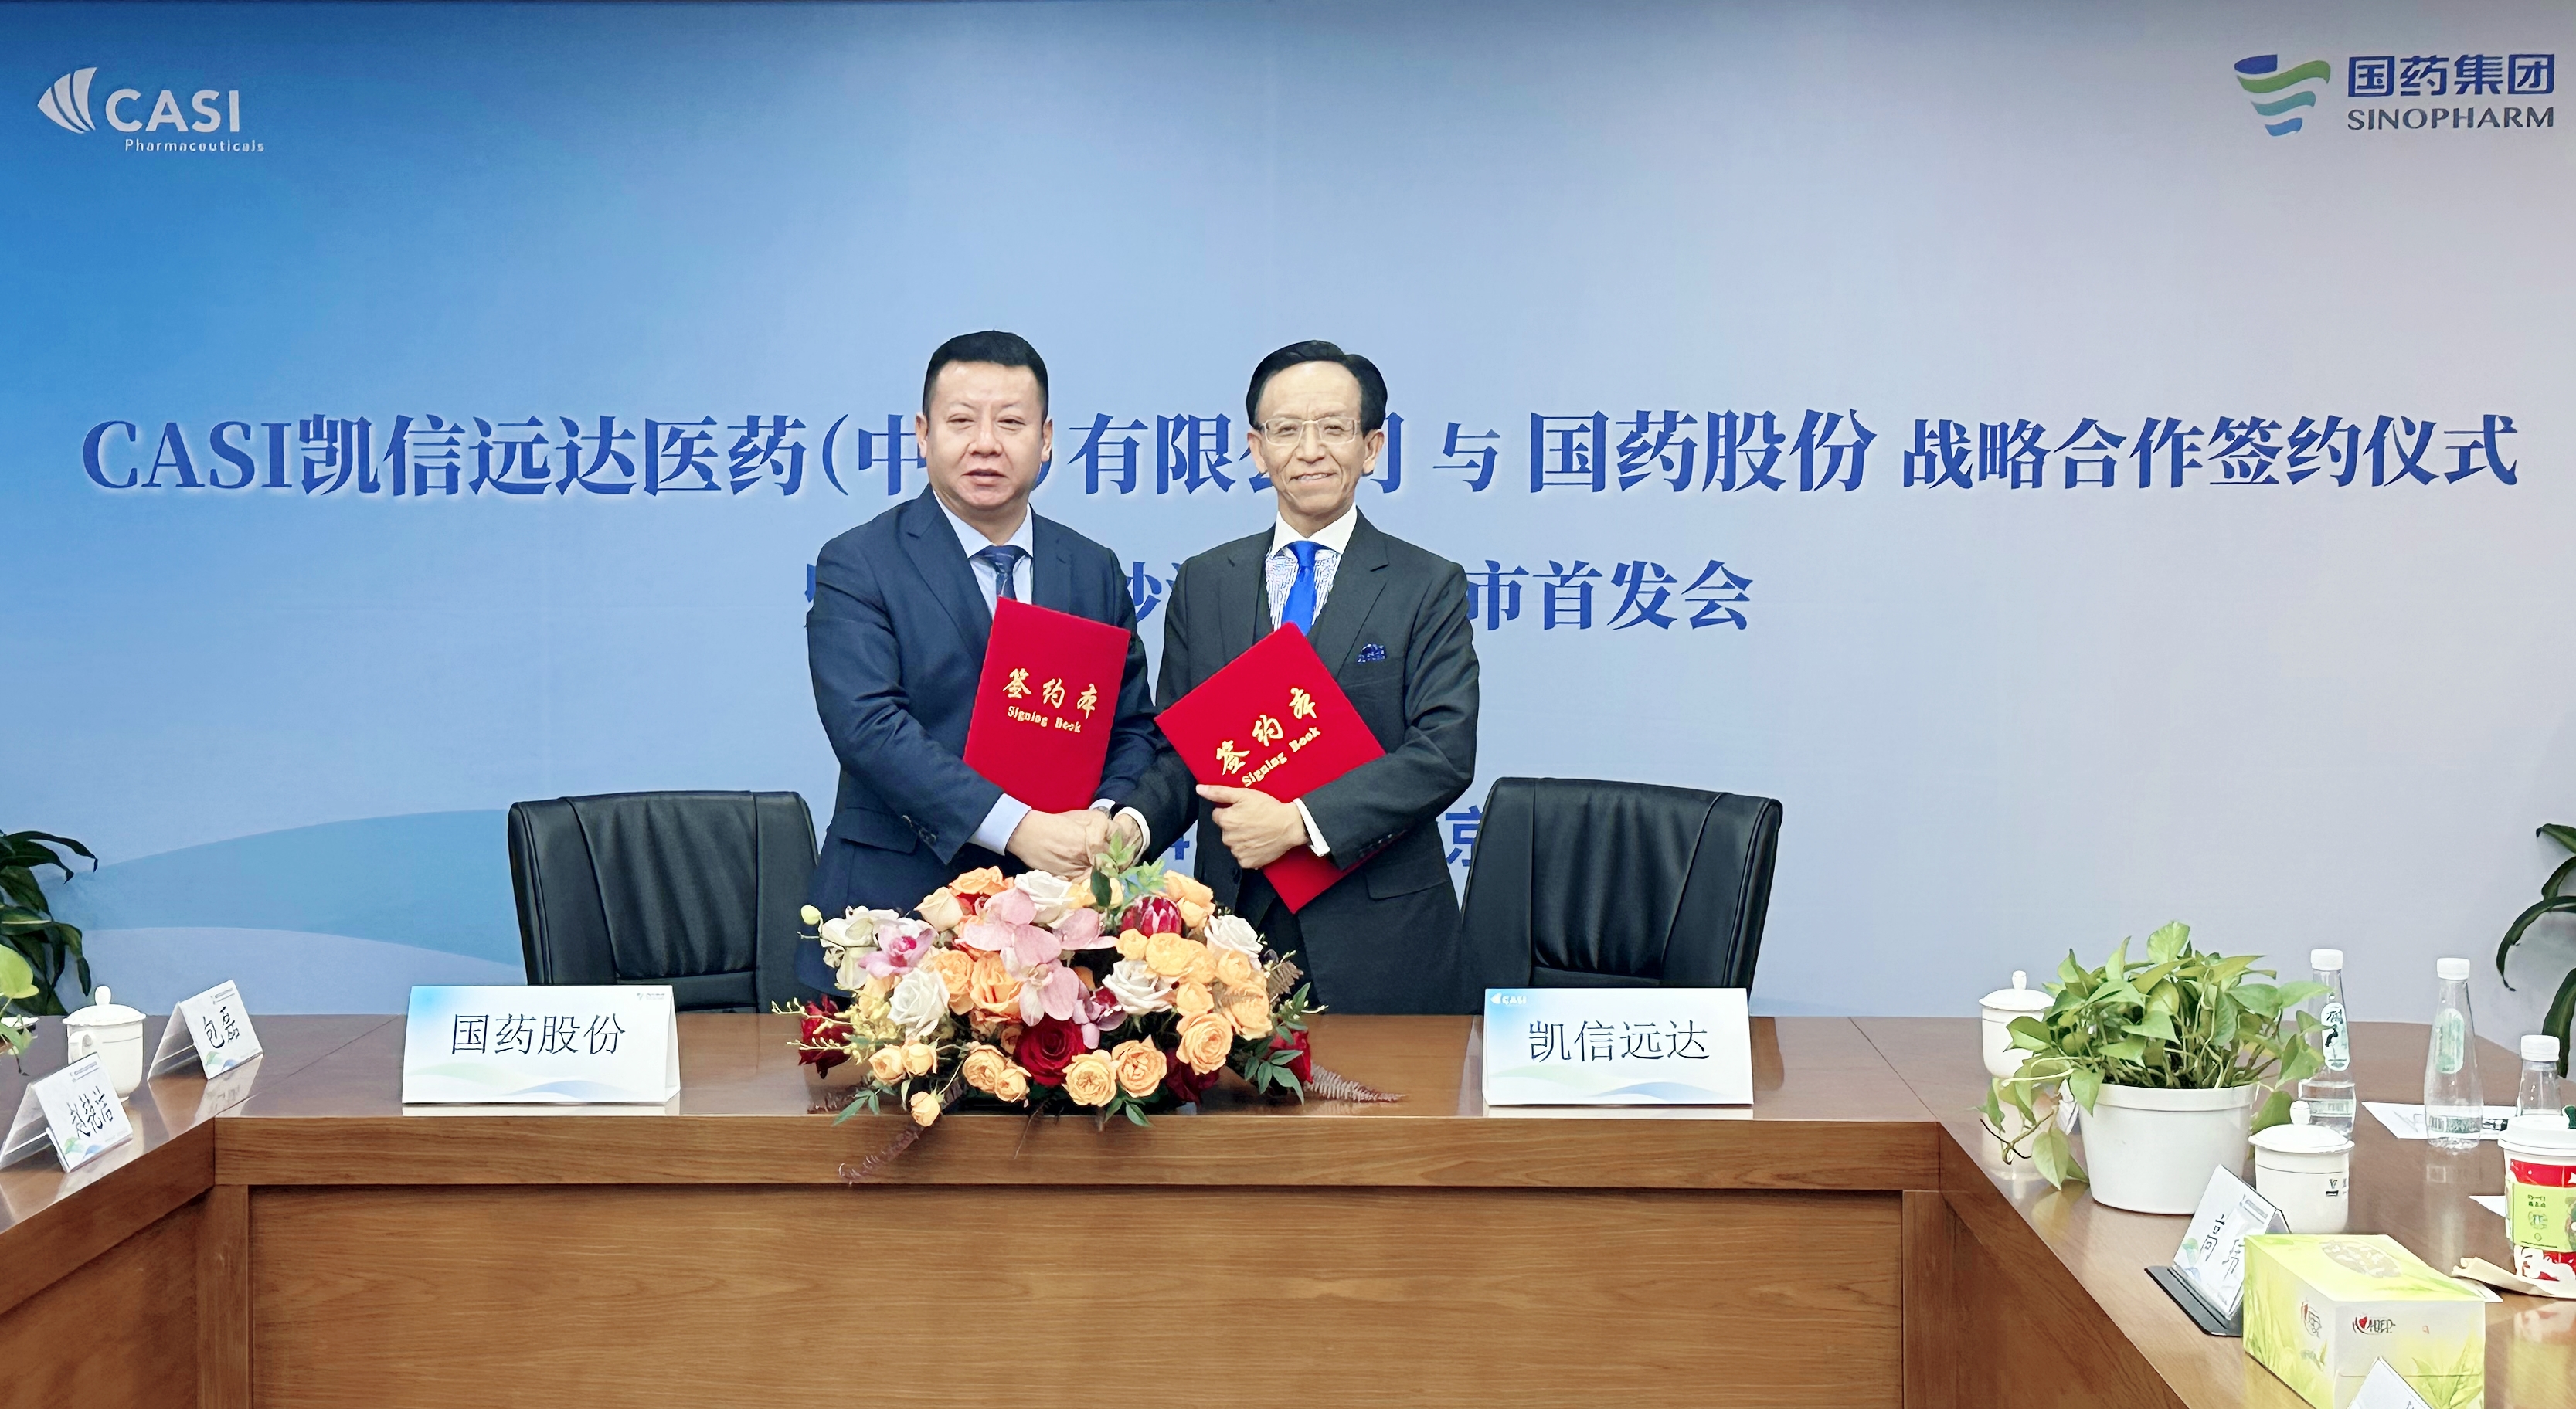 CASI Pharmaceuticals Announces Strategic Partnership with China National Medicines Corporation